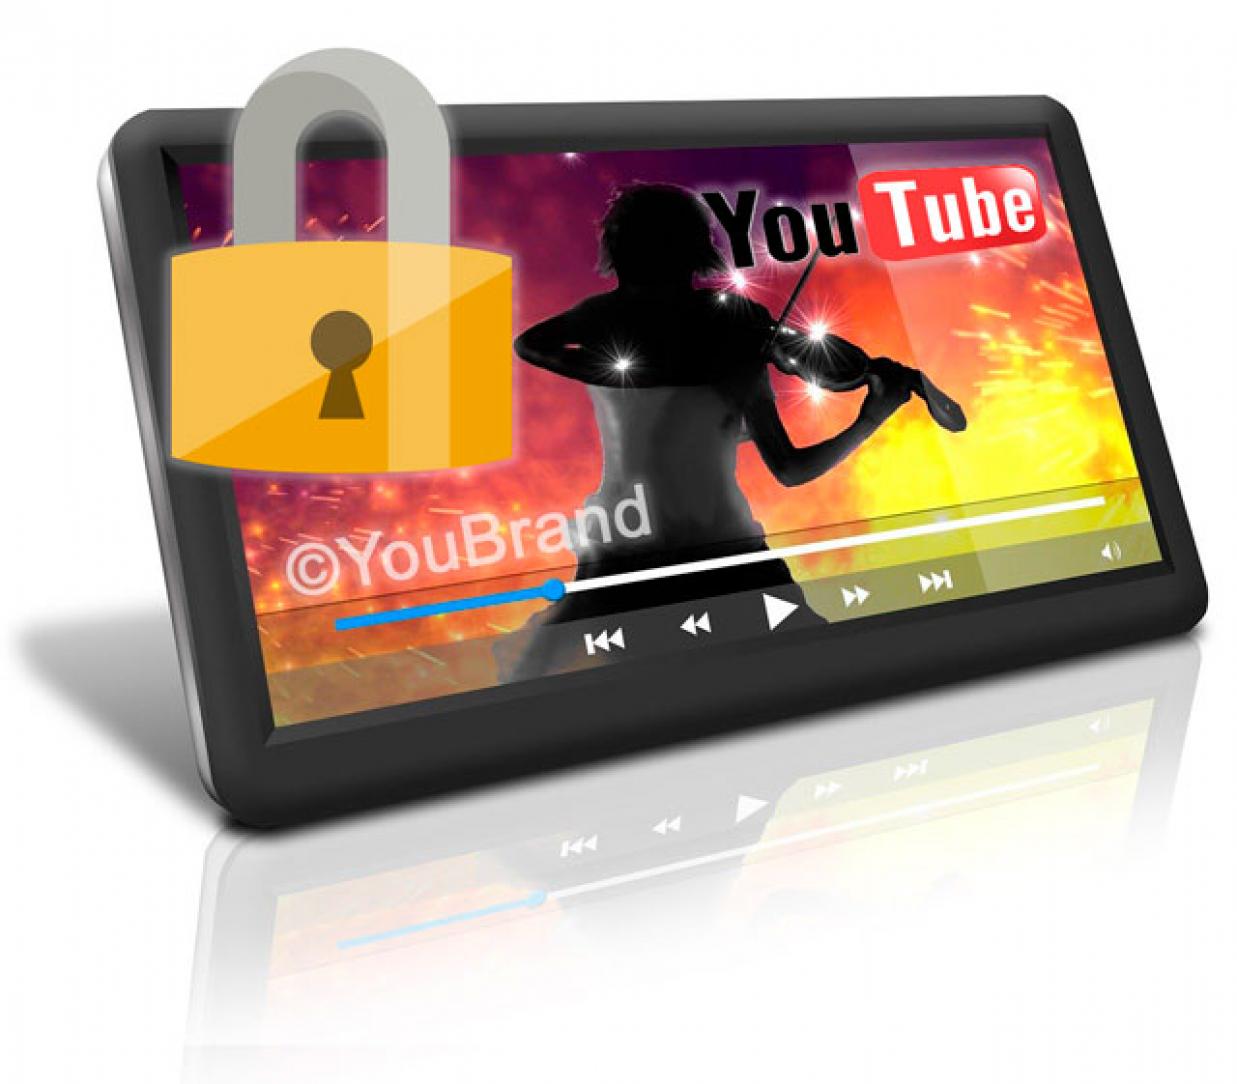 ochrana videa pomocí autorských práv.